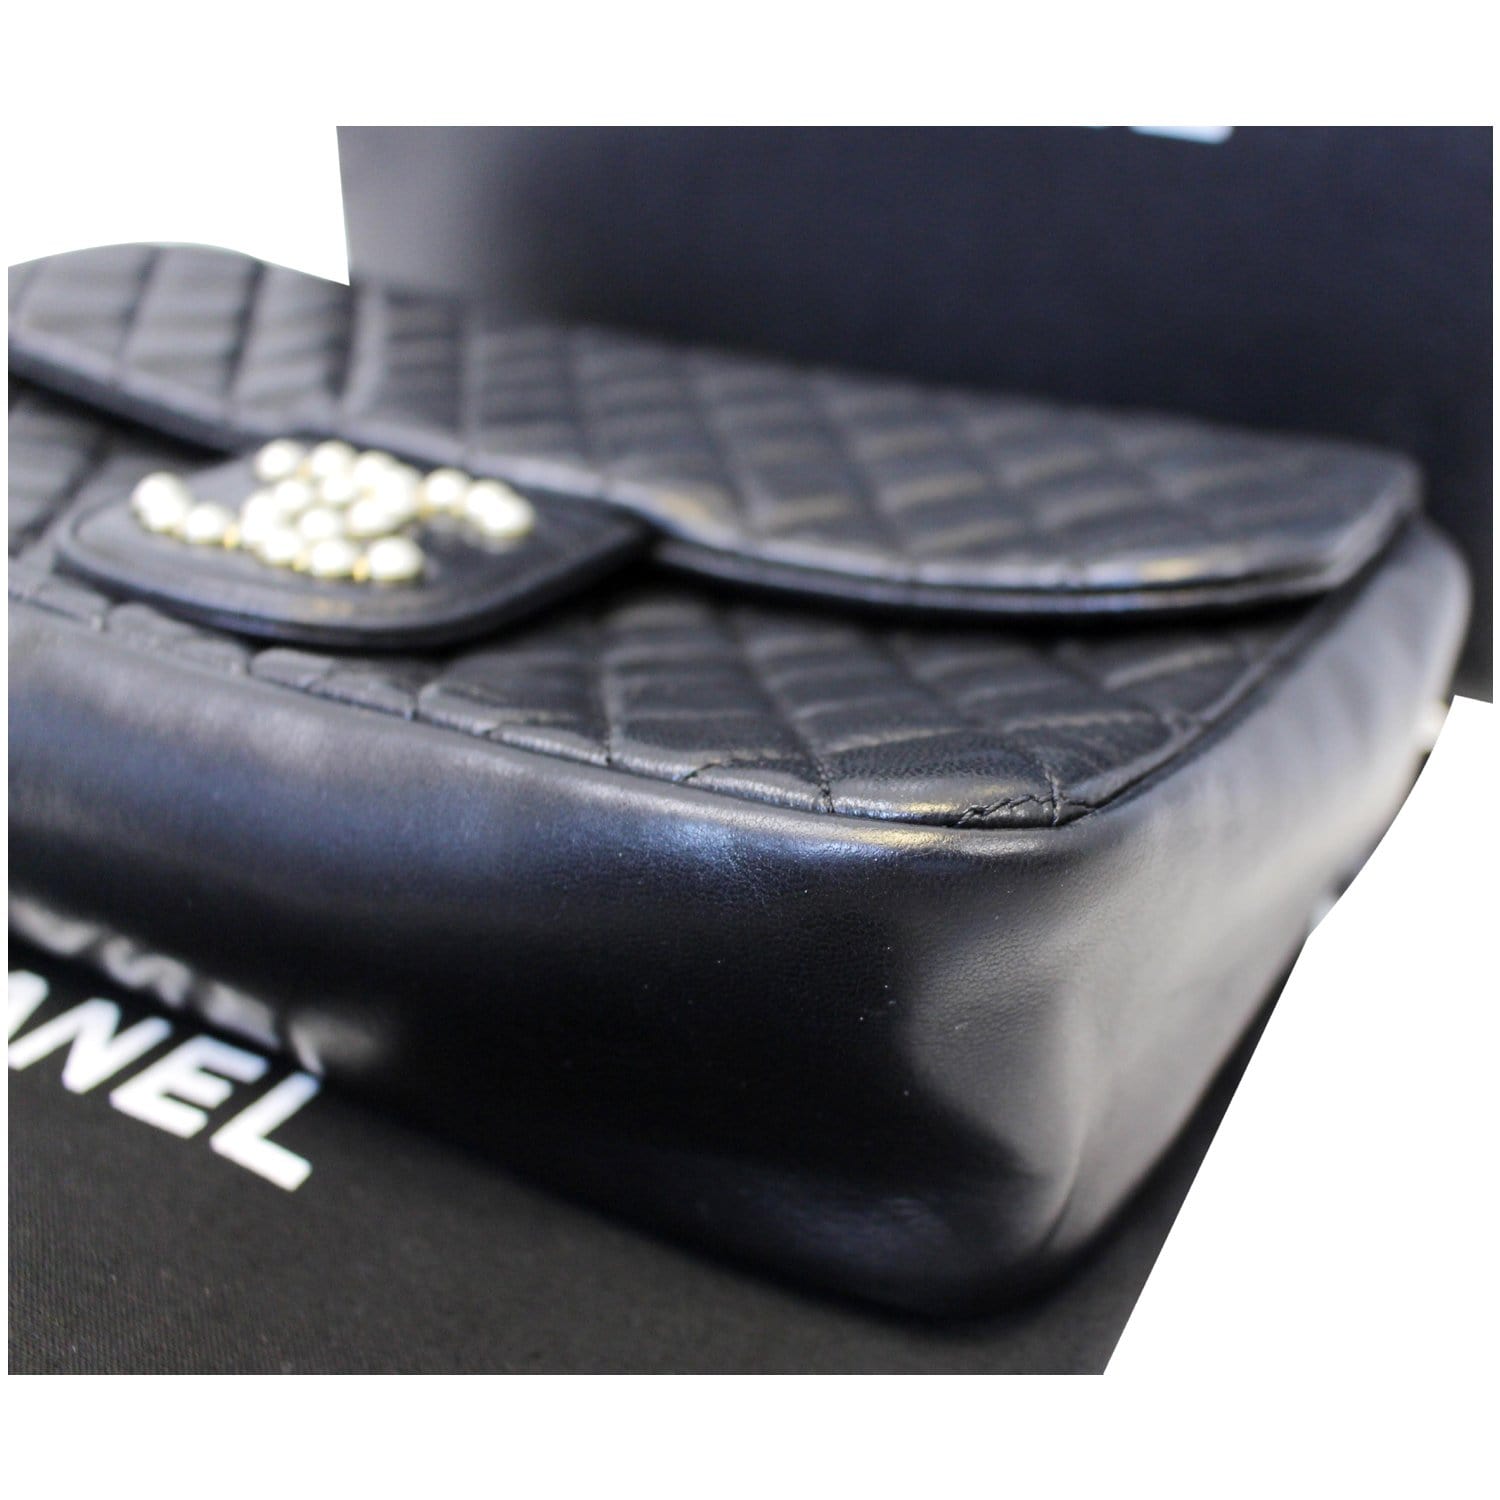 pearl chanel handbag black